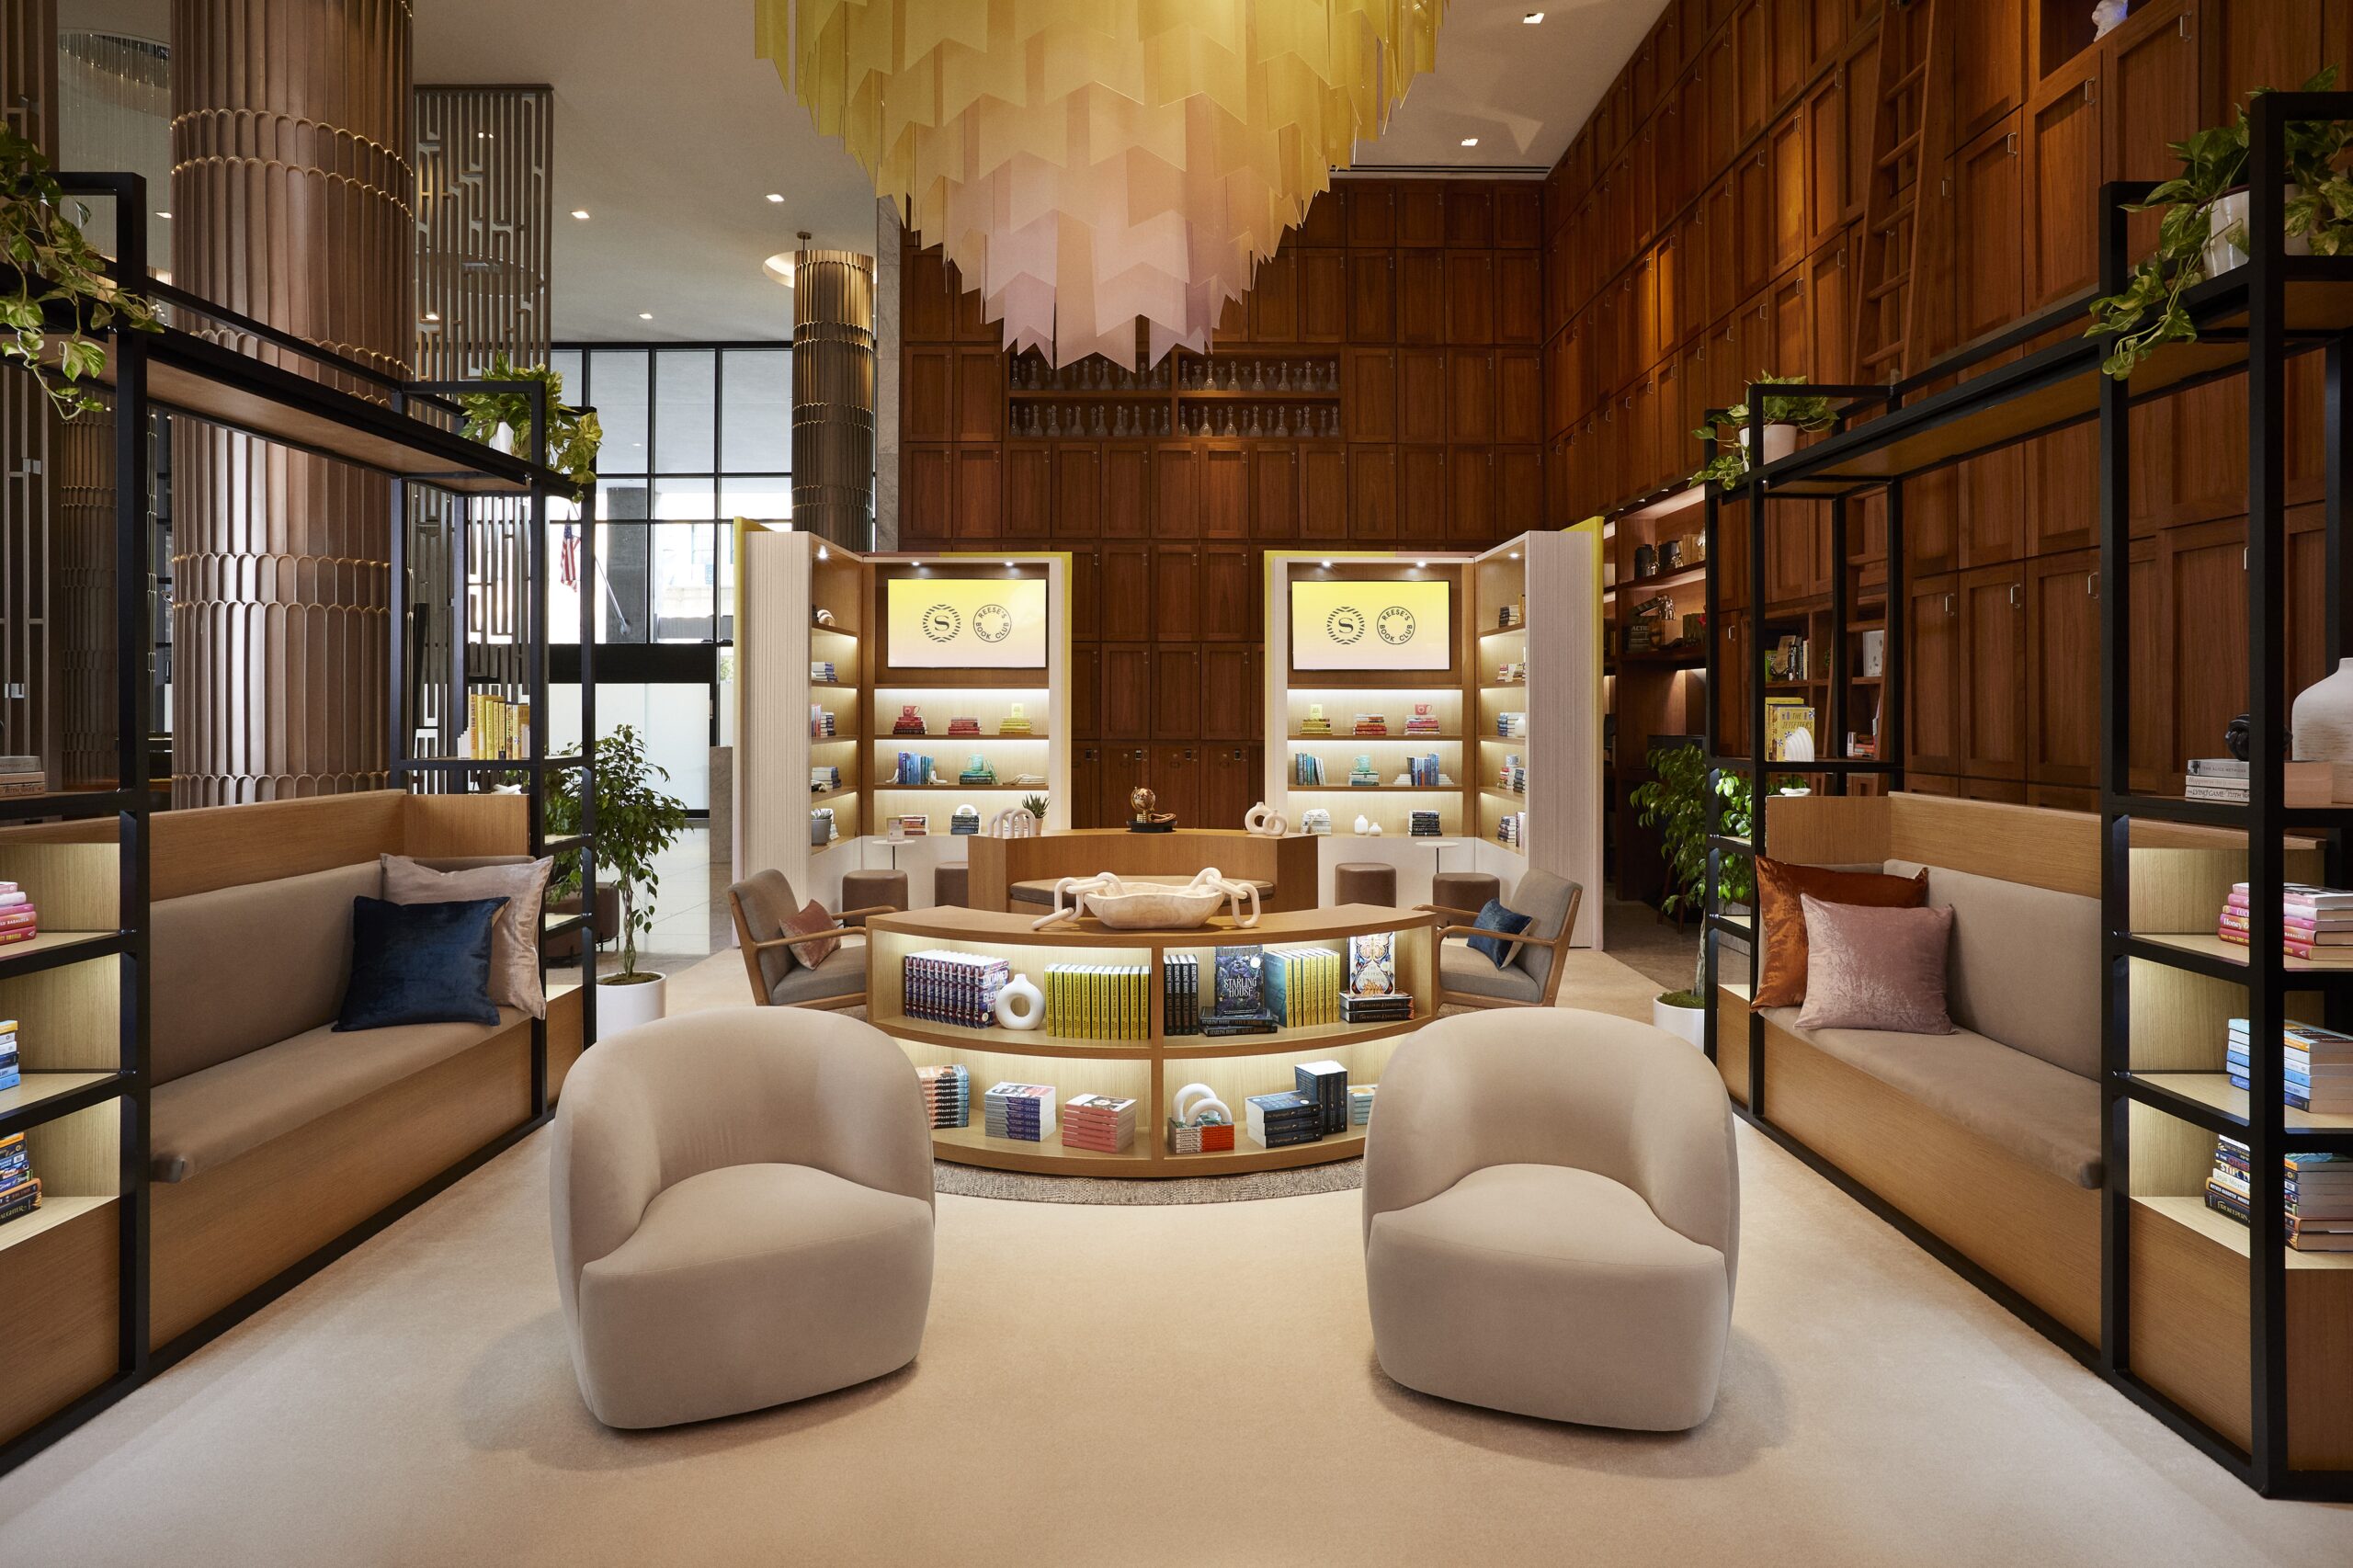 Photo of: Reese’s Book Club x Sheraton Lobby Library at Sheraton Grand Los Angeles // Marriott